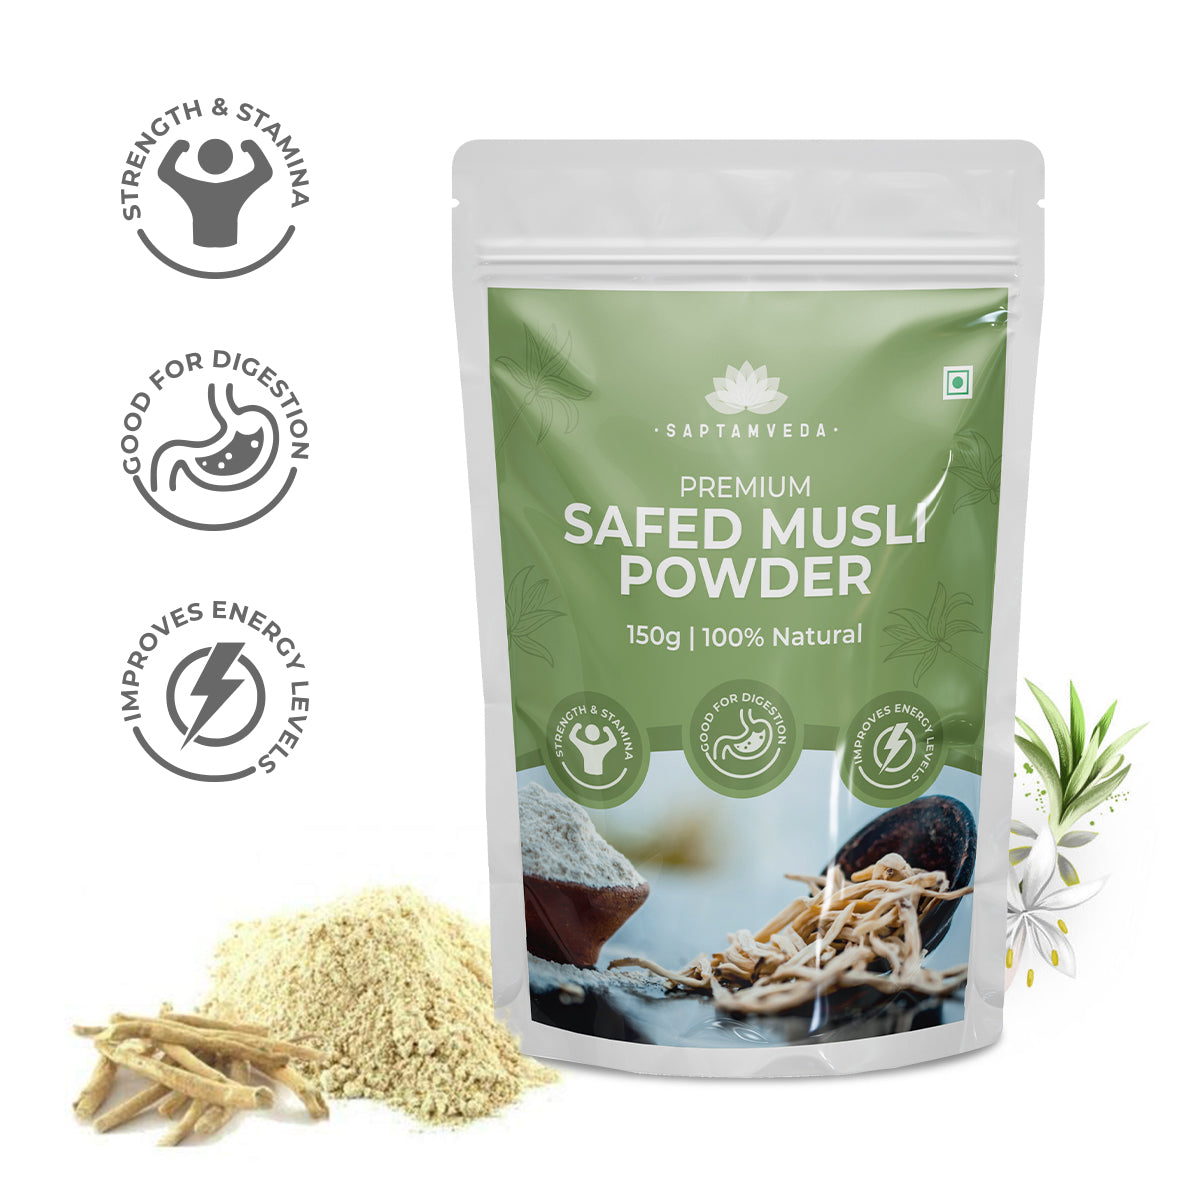 Get Premium Safed Musli Powder